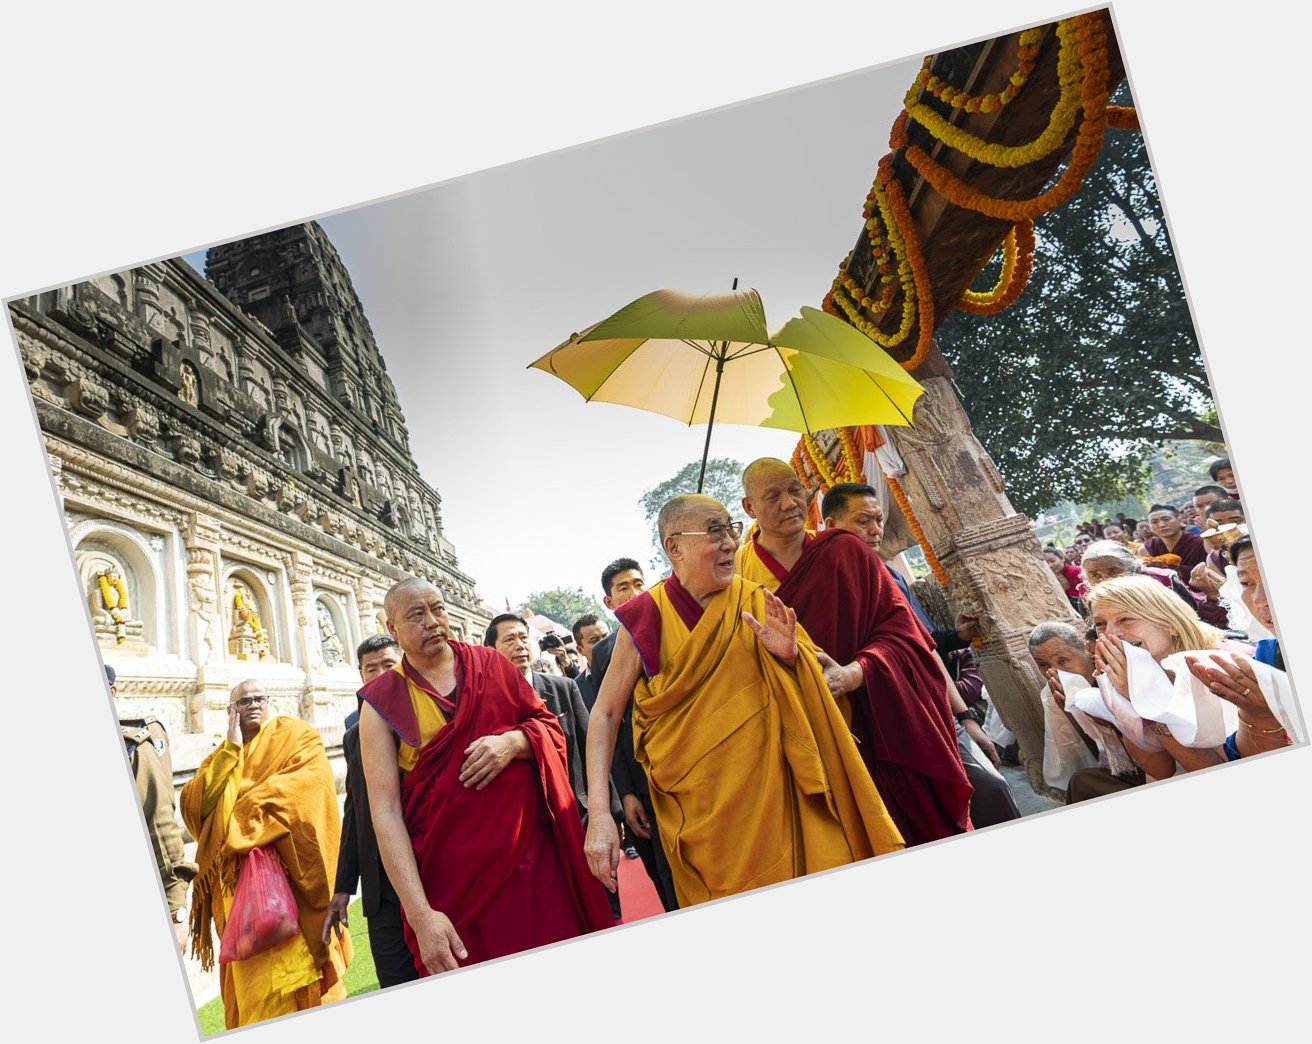 Happy birthday to His Holiness Dalai Lama 